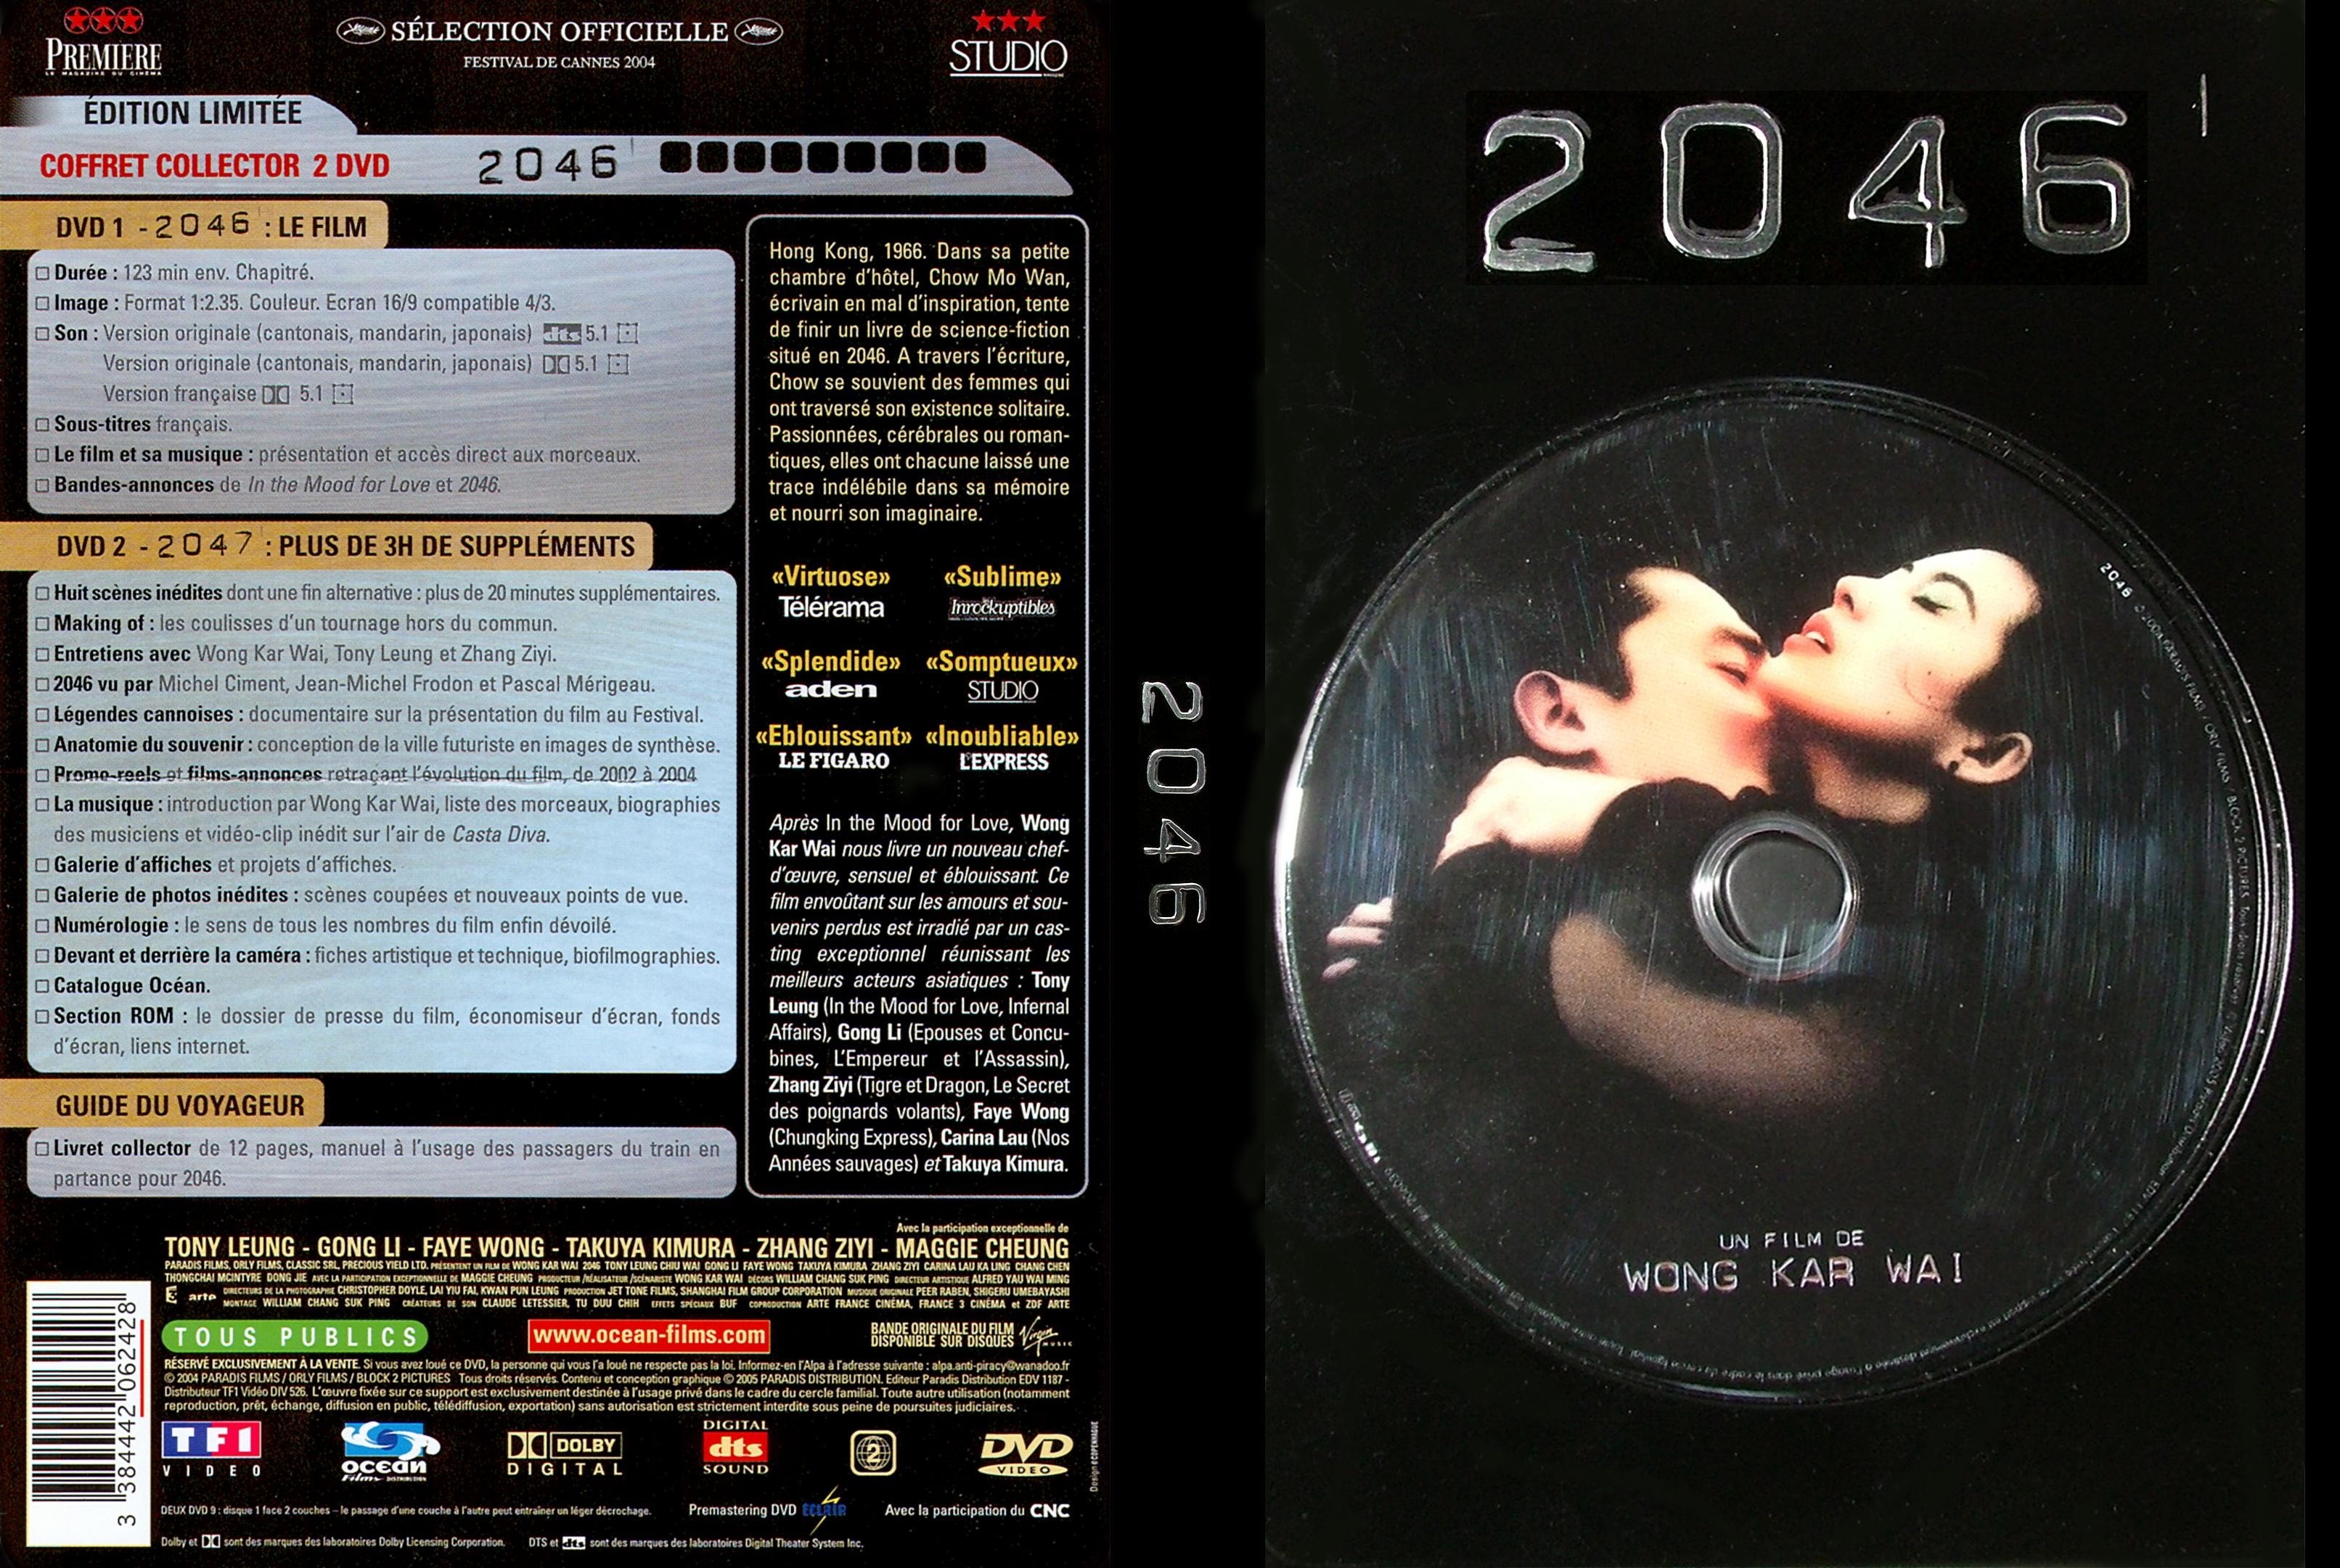 Jaquette DVD 2046